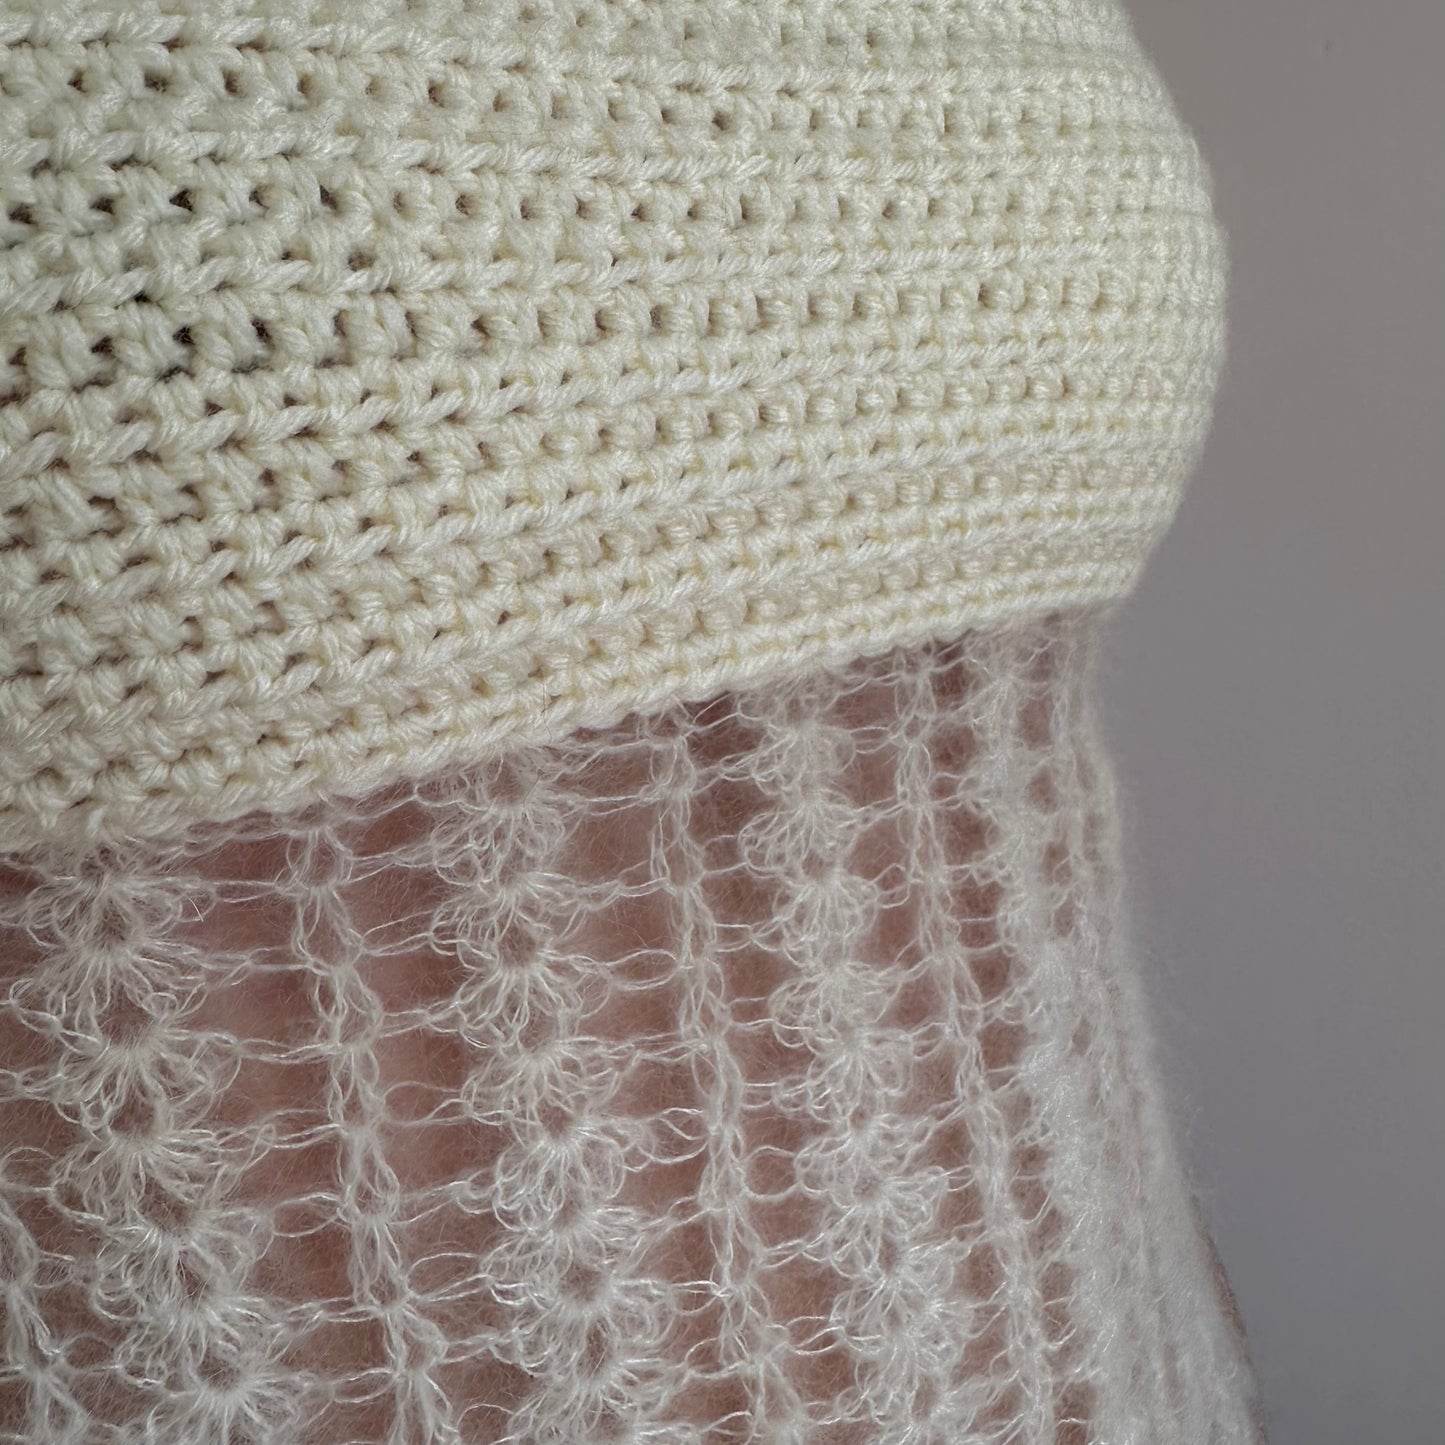 Handmade crochet mohair lace cami top in cream